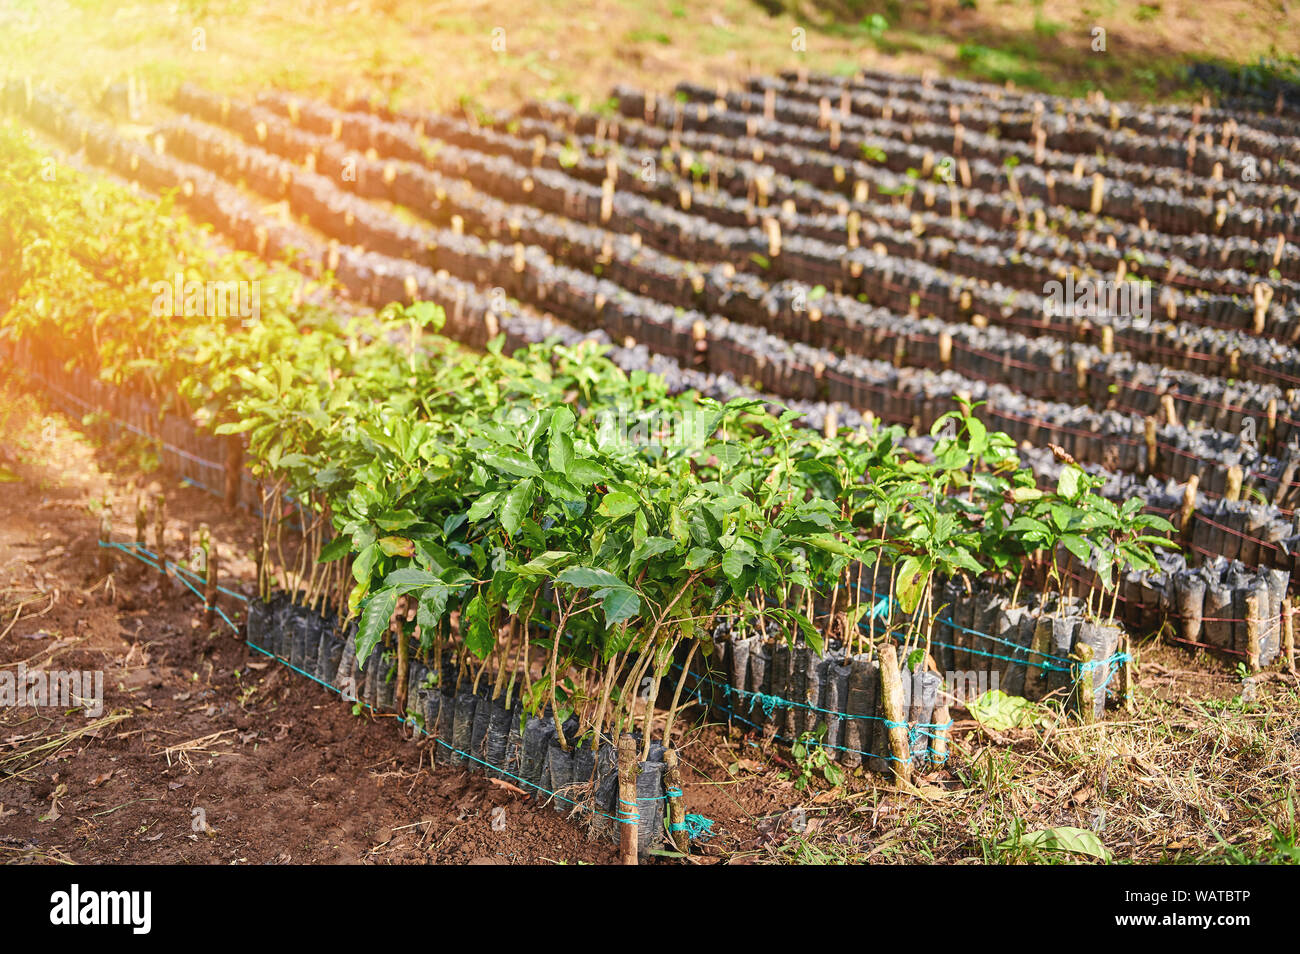 Nursery for baby coffee plants on farm plantation in bright sunny light Stock Photo